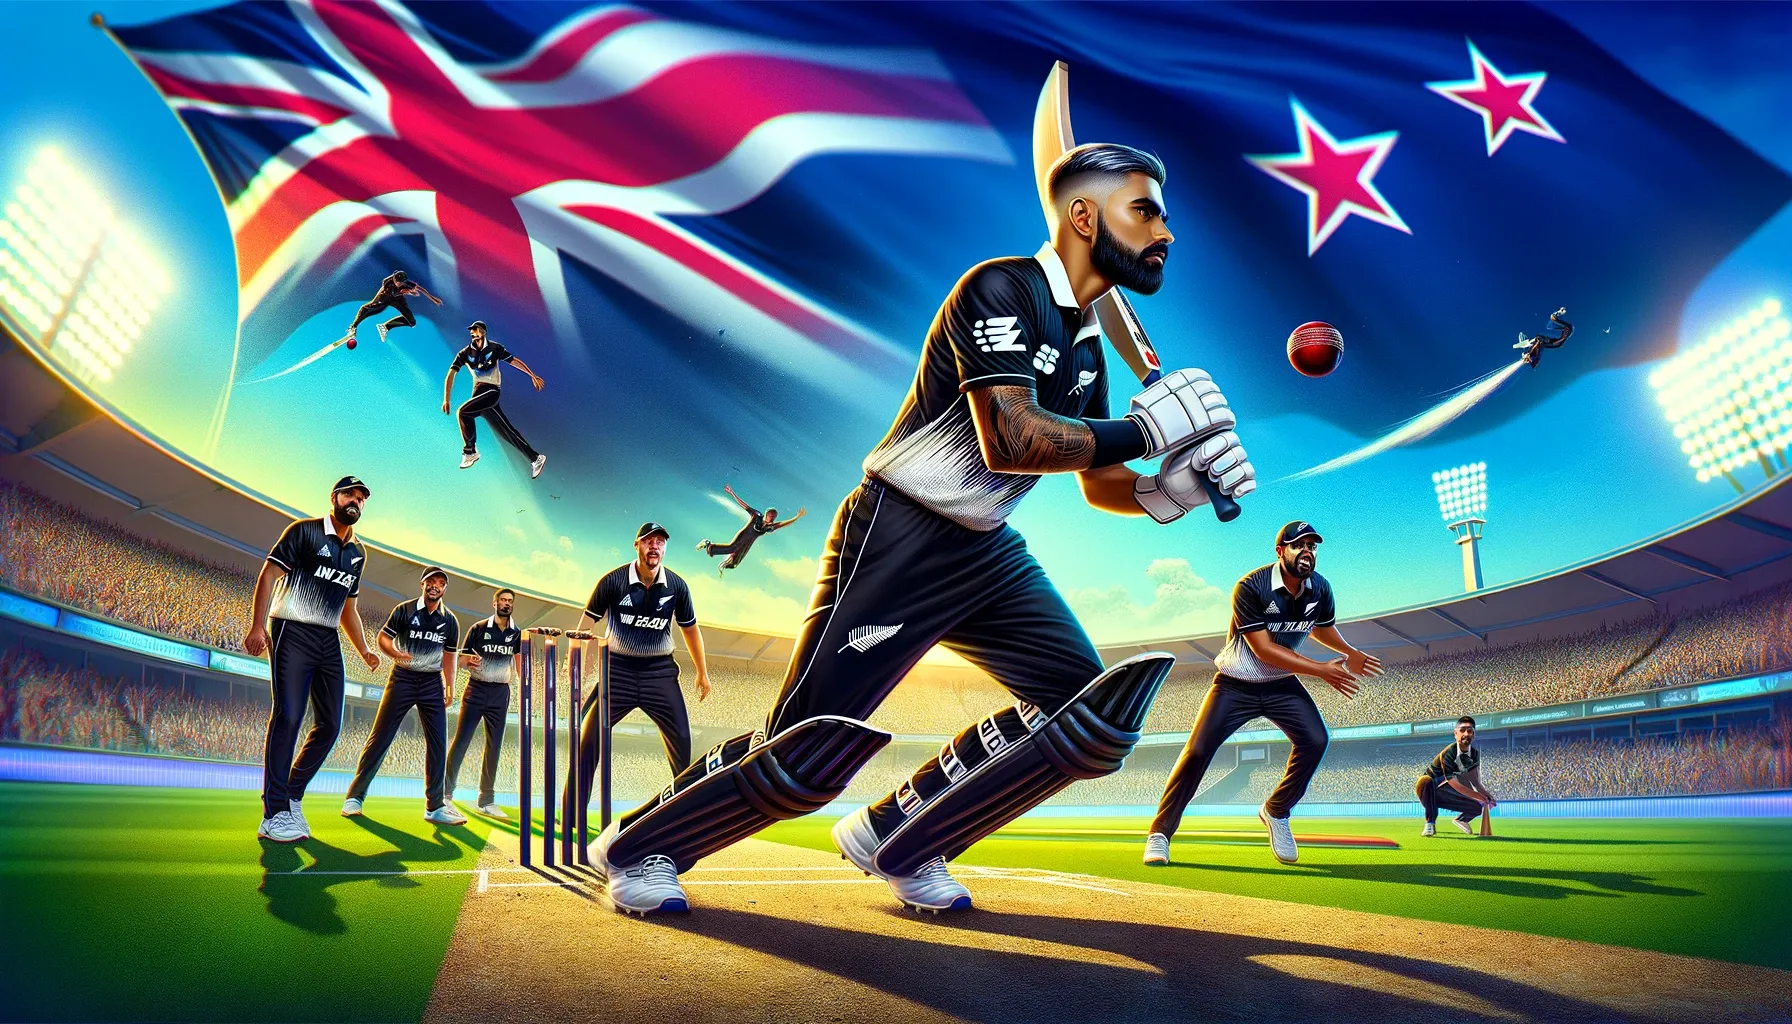 New Zealand National Cricket Team: Black Caps in Green Field